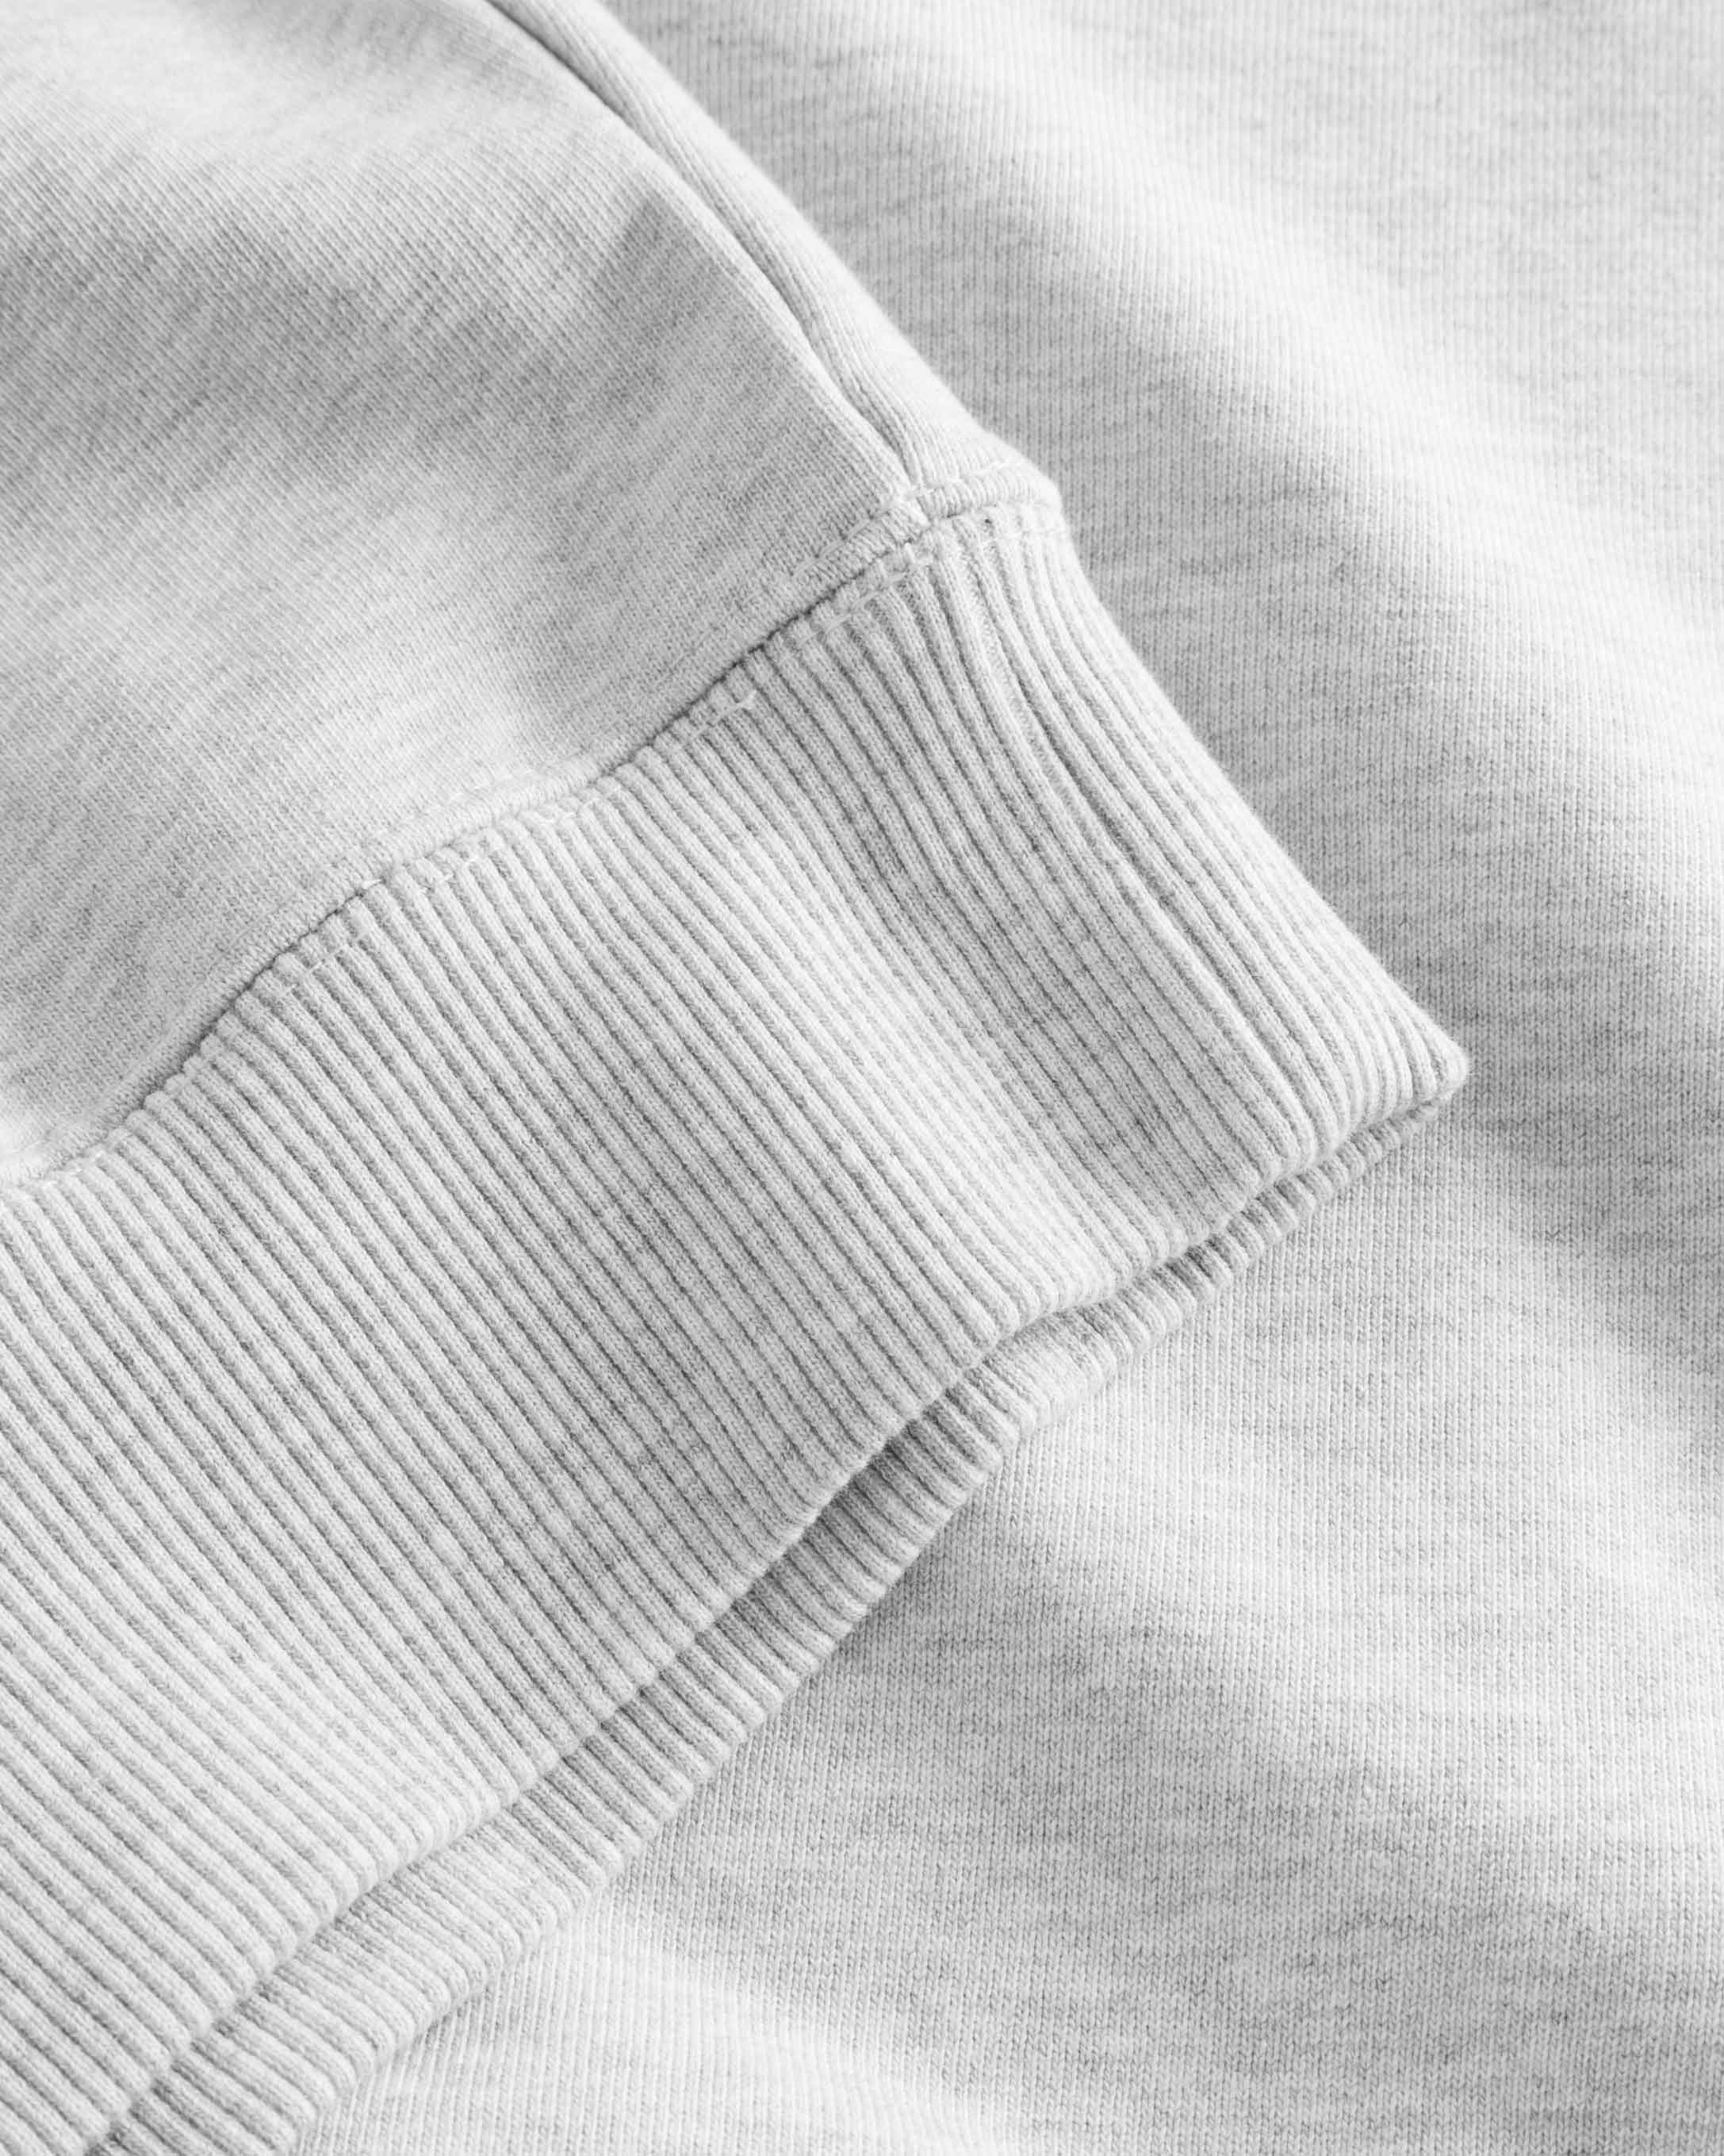 Close-up of ribbed cuffs on a grey sweatshirt.